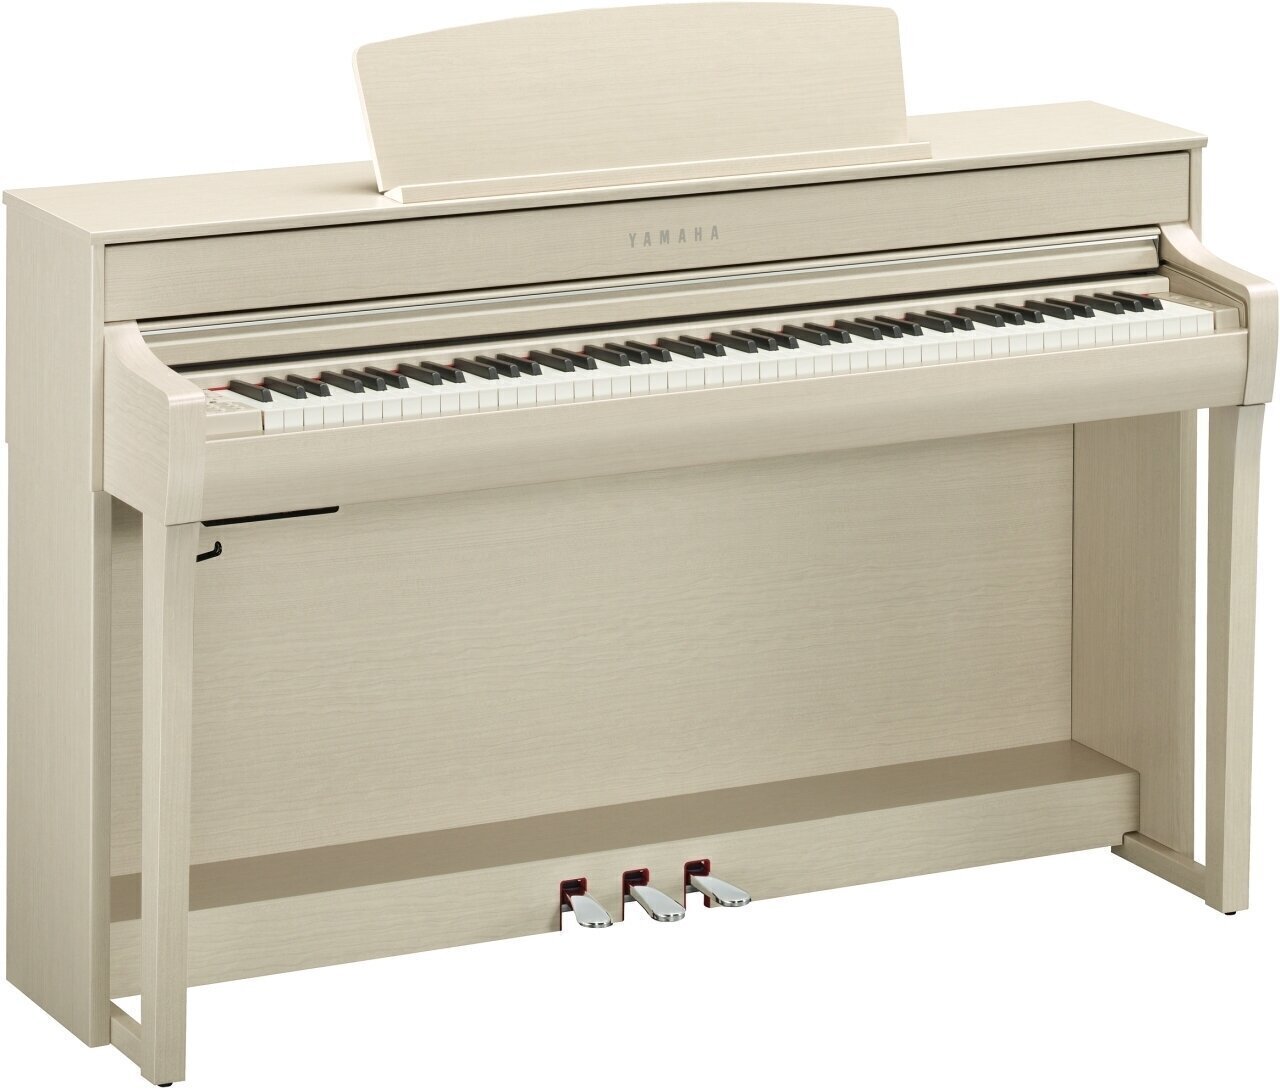 Digital Piano Yamaha CLP 745 White Ash Digital Piano